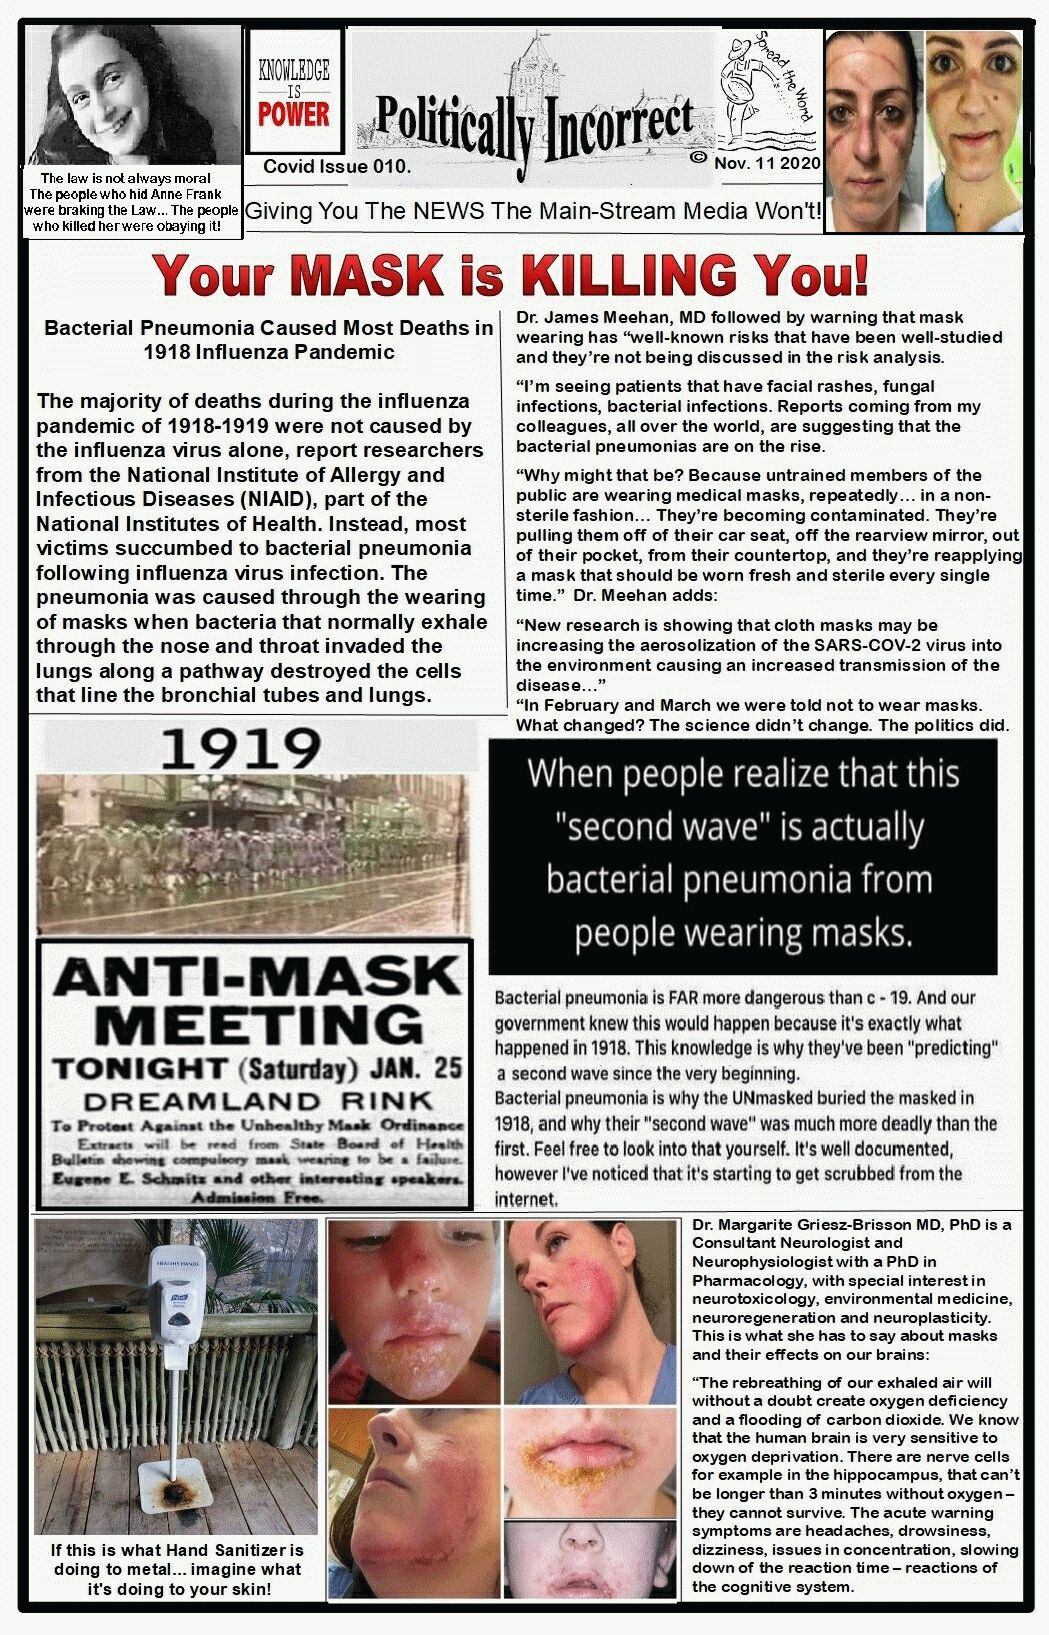 Dangers of masks